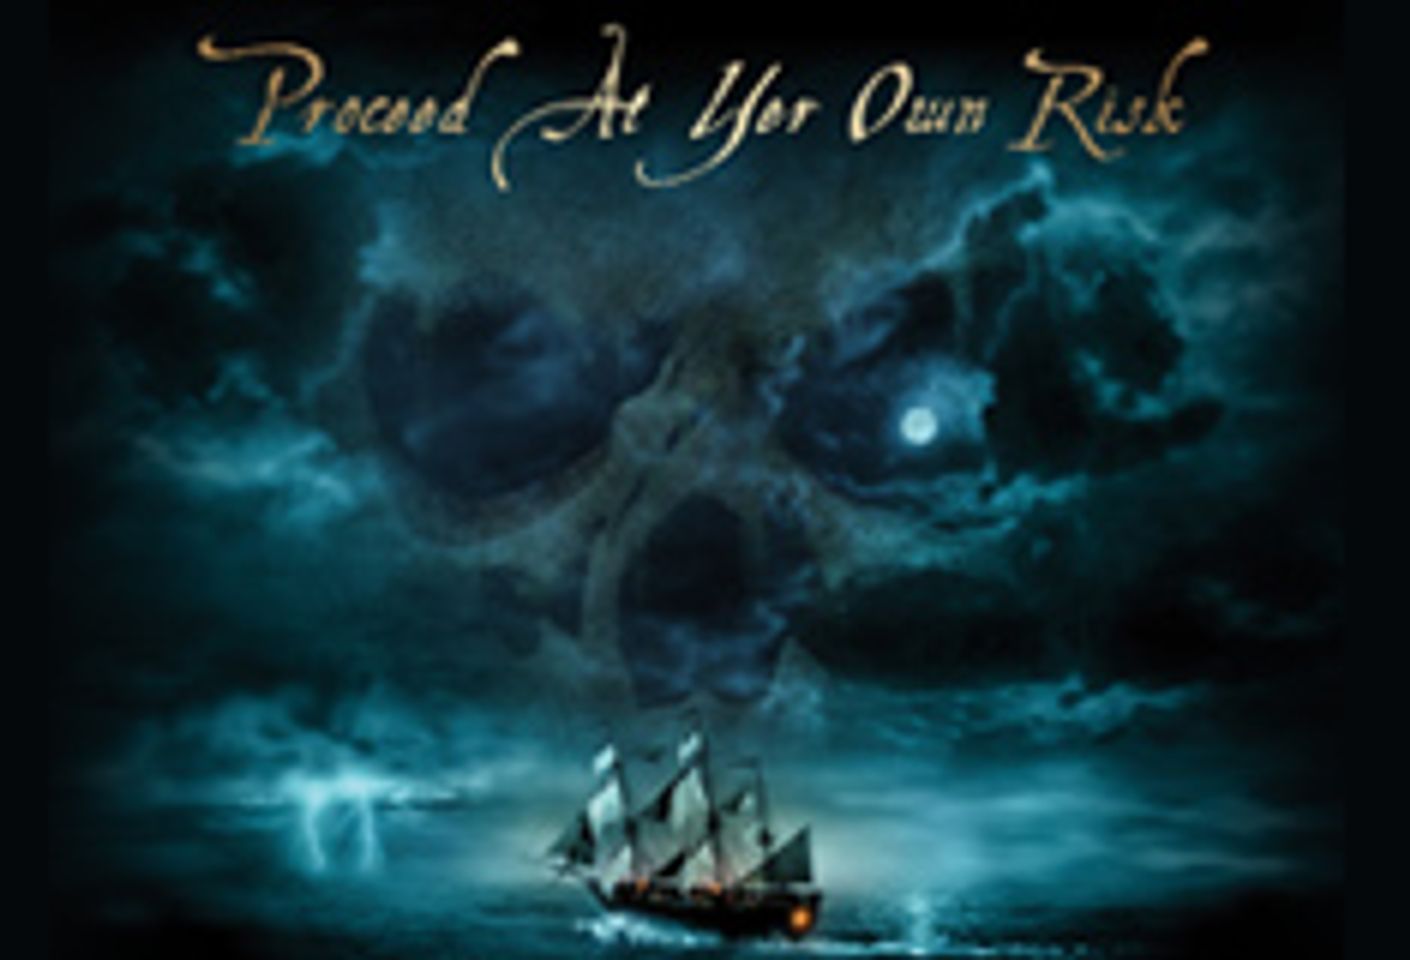 Digital Playground Launches 'Pirates II' Marketing Campaign